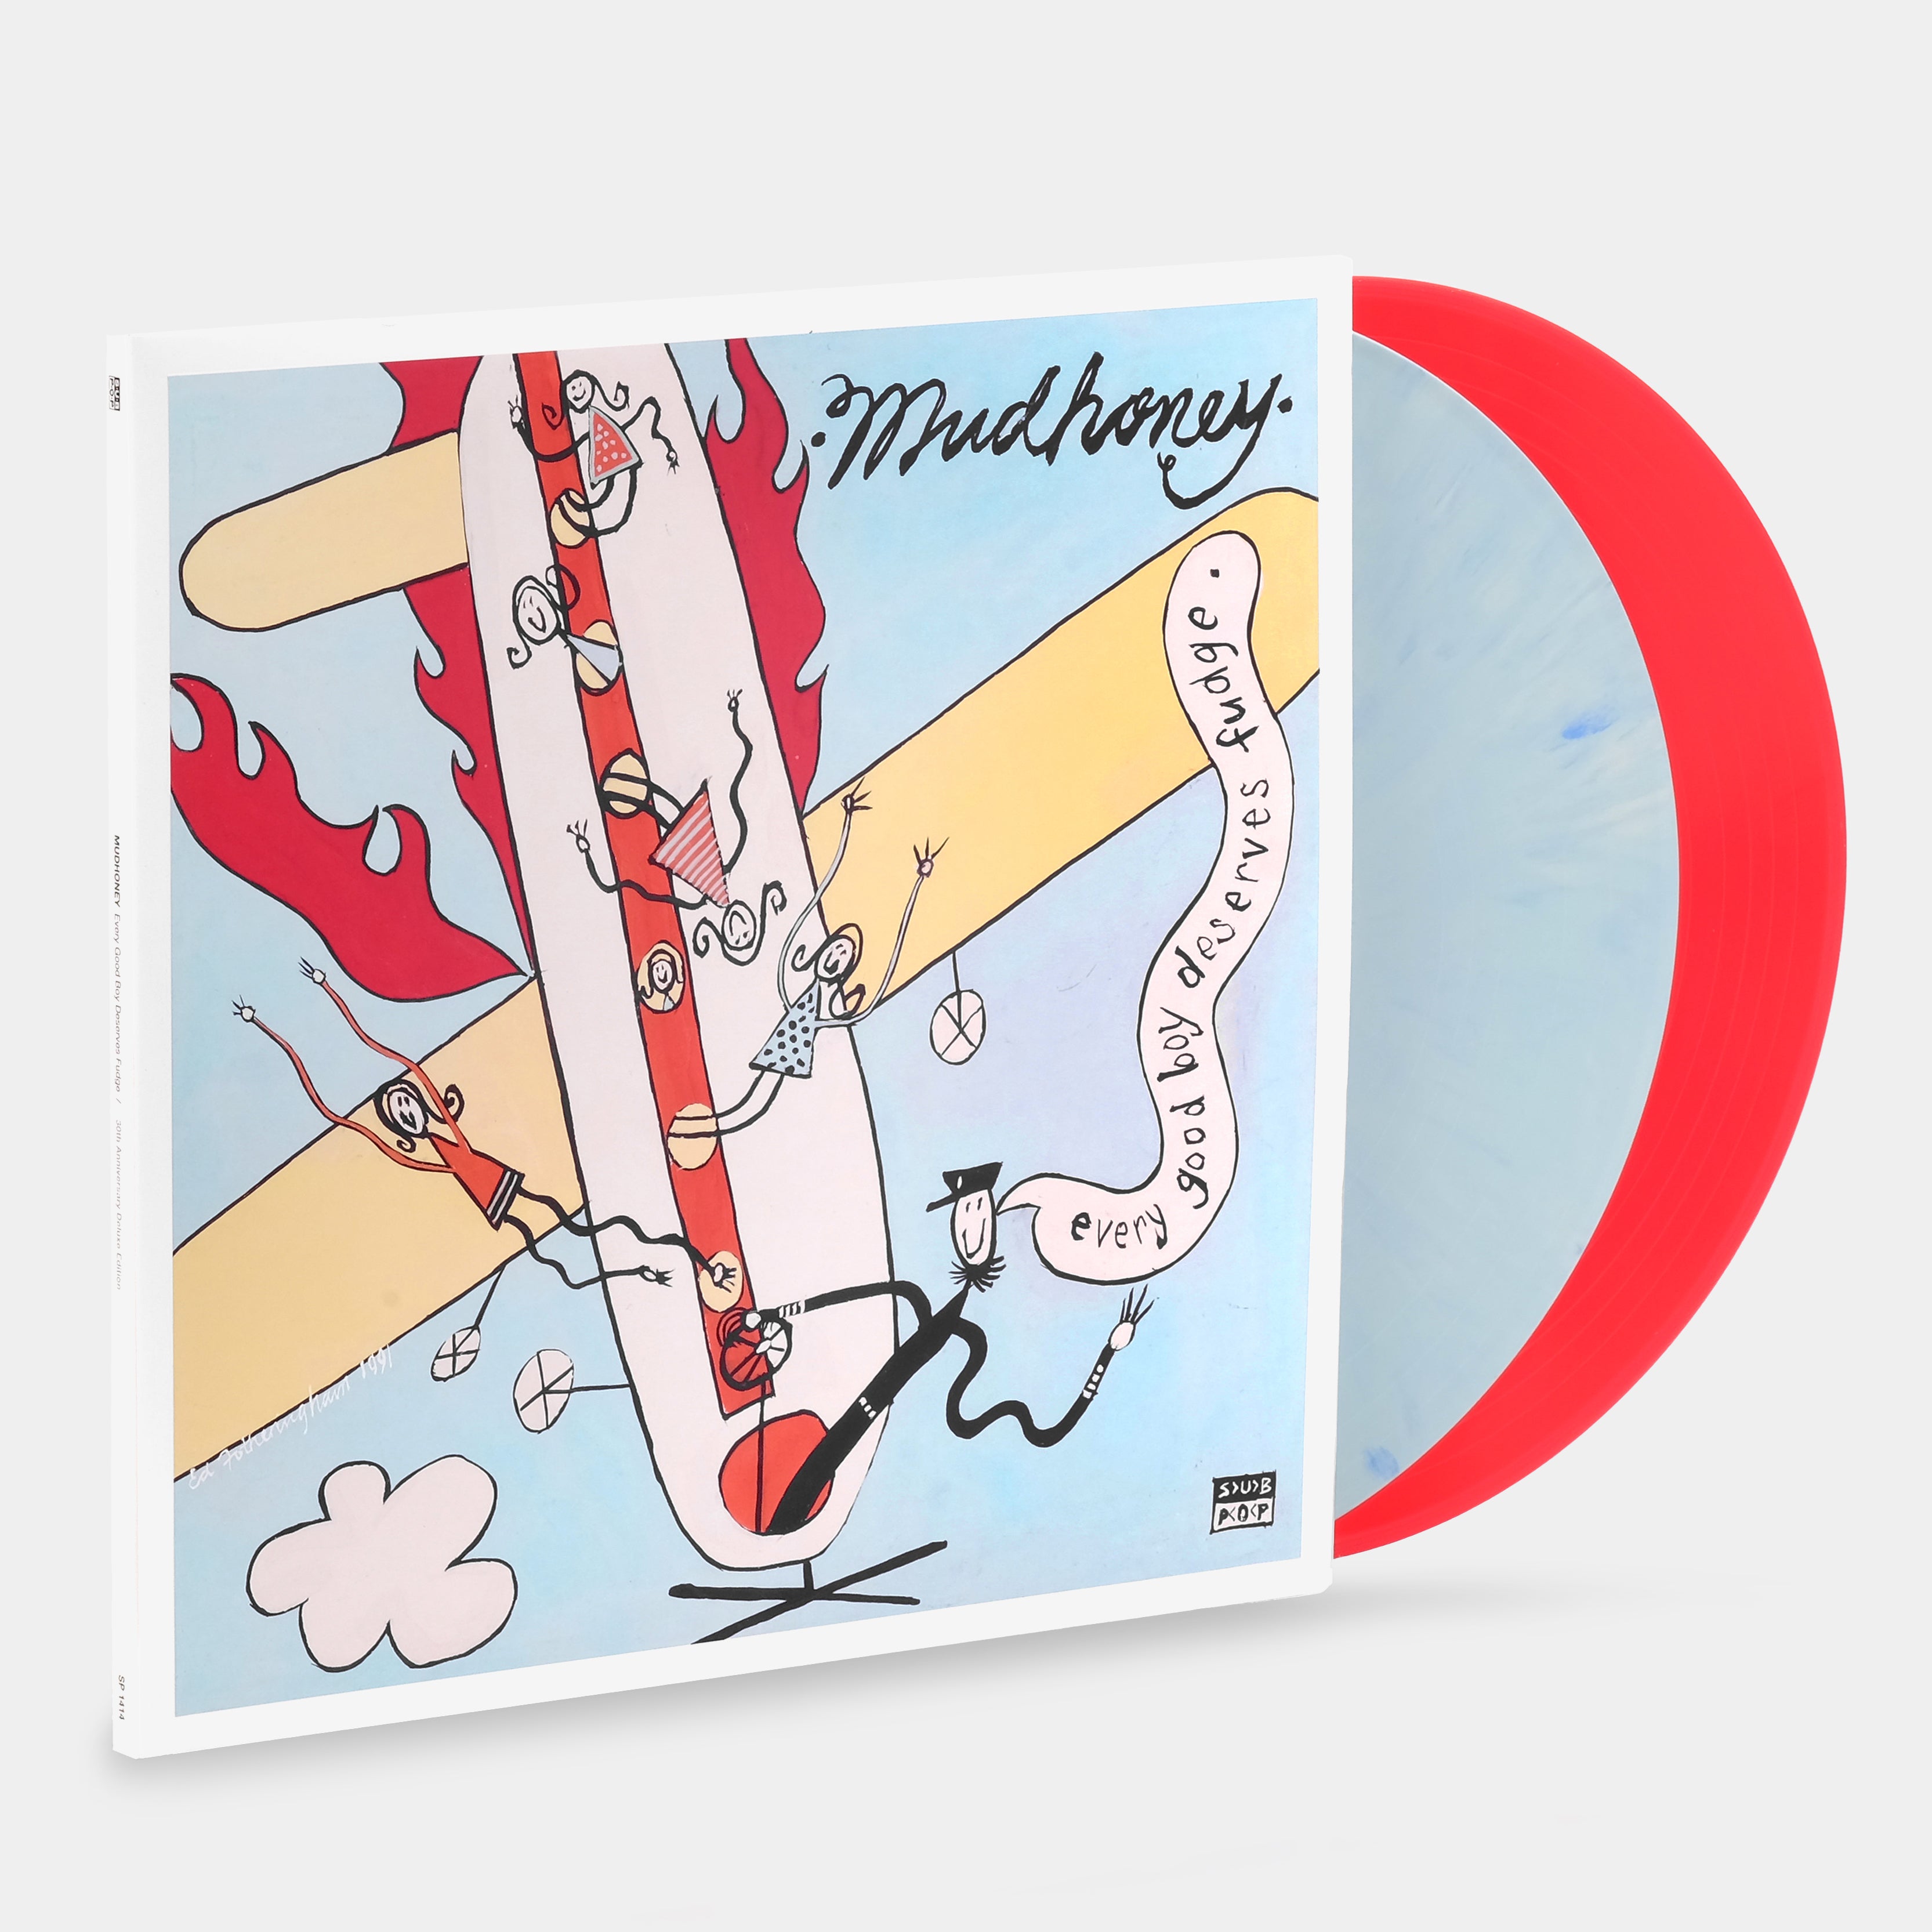 Mudhoney - Every Good Boy Deserves Fudge 2xLP Blue & Red Vinyl Record